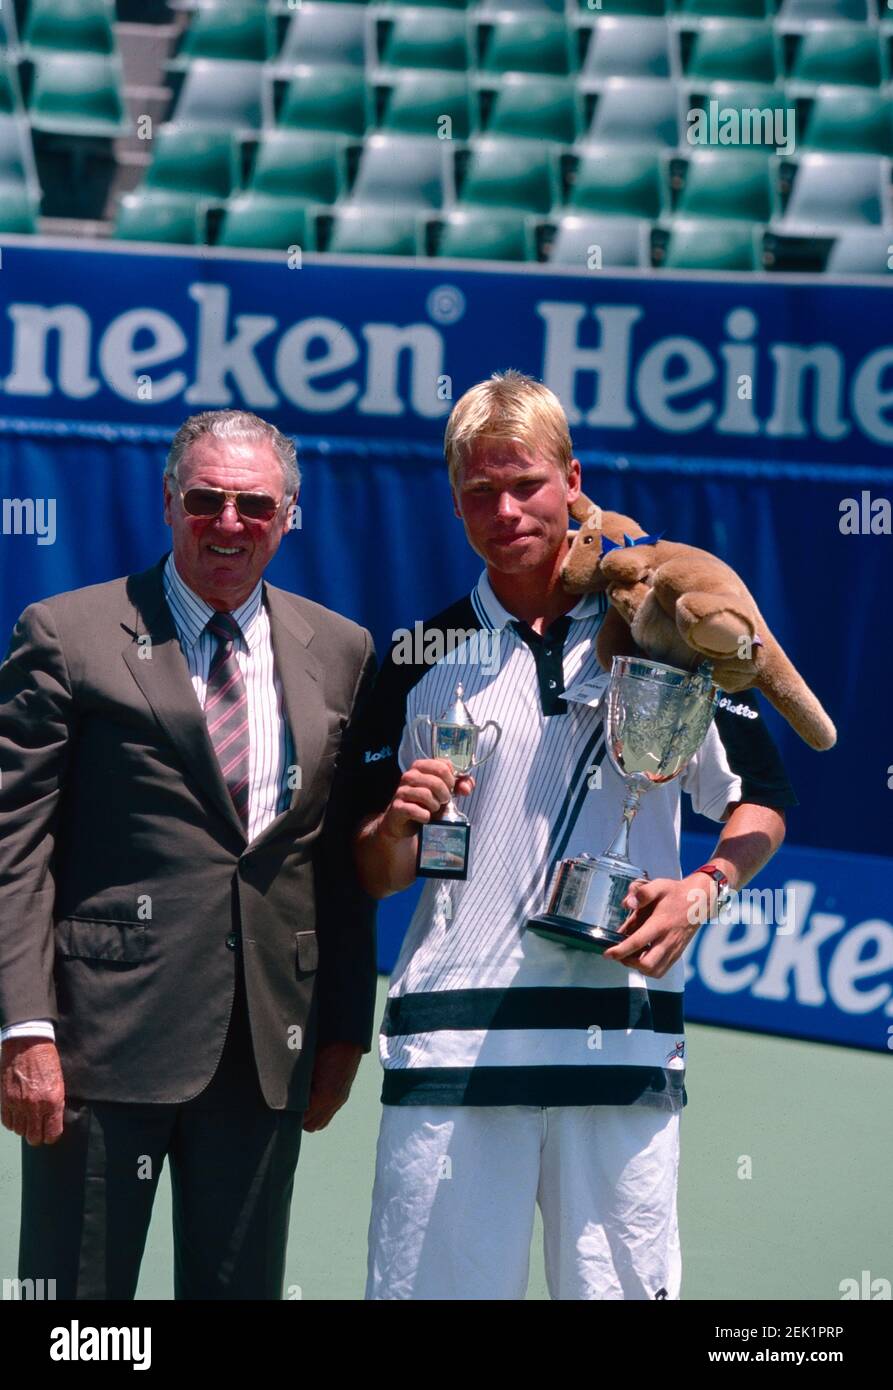 Danish tennis player Kristian Pless, 2000s Stock Photo - Alamy